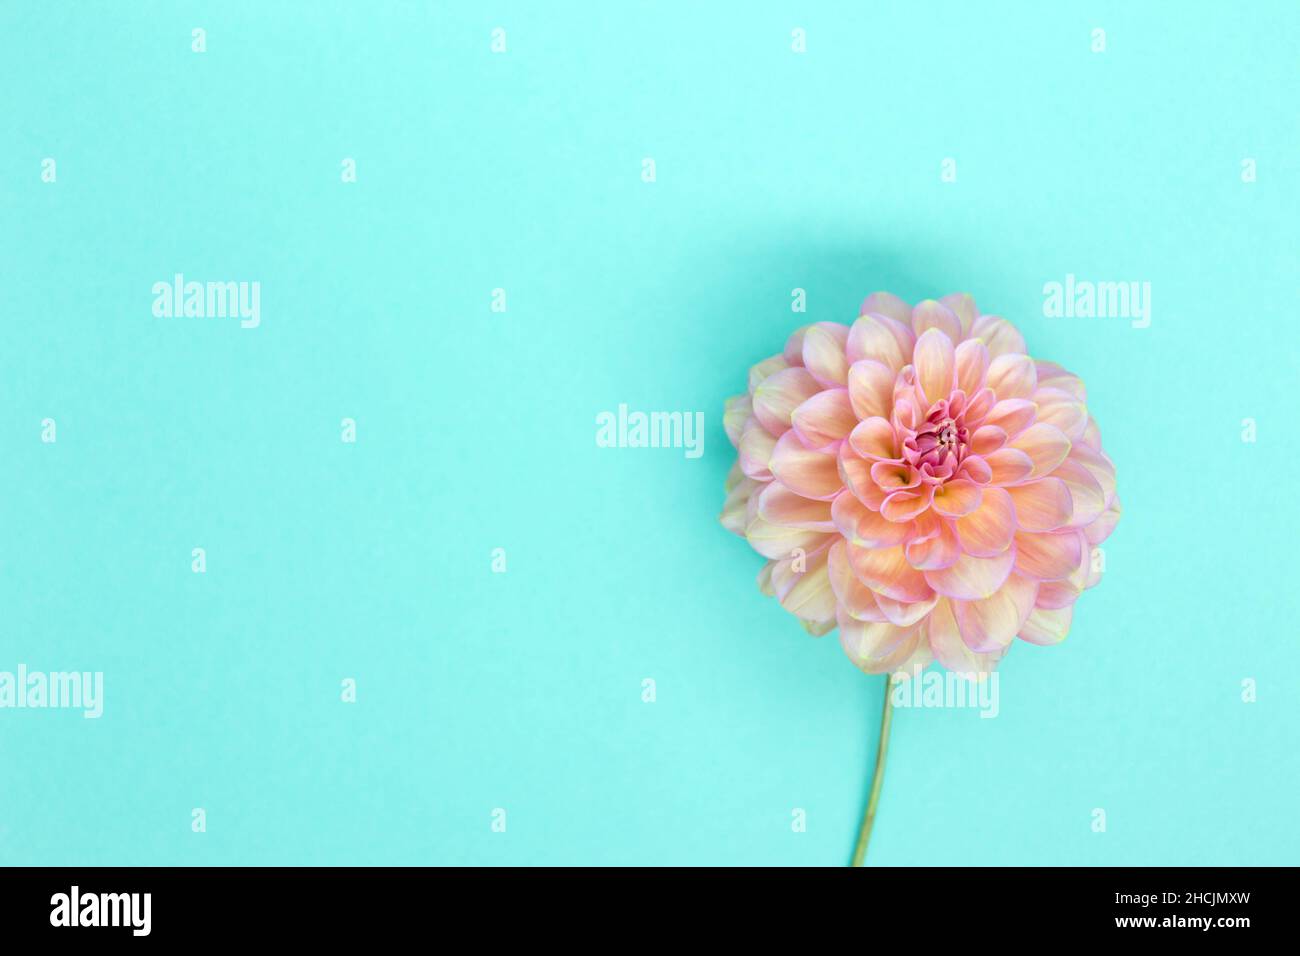 Dahlia pink flower on blue background. Copyspace Stock Photo